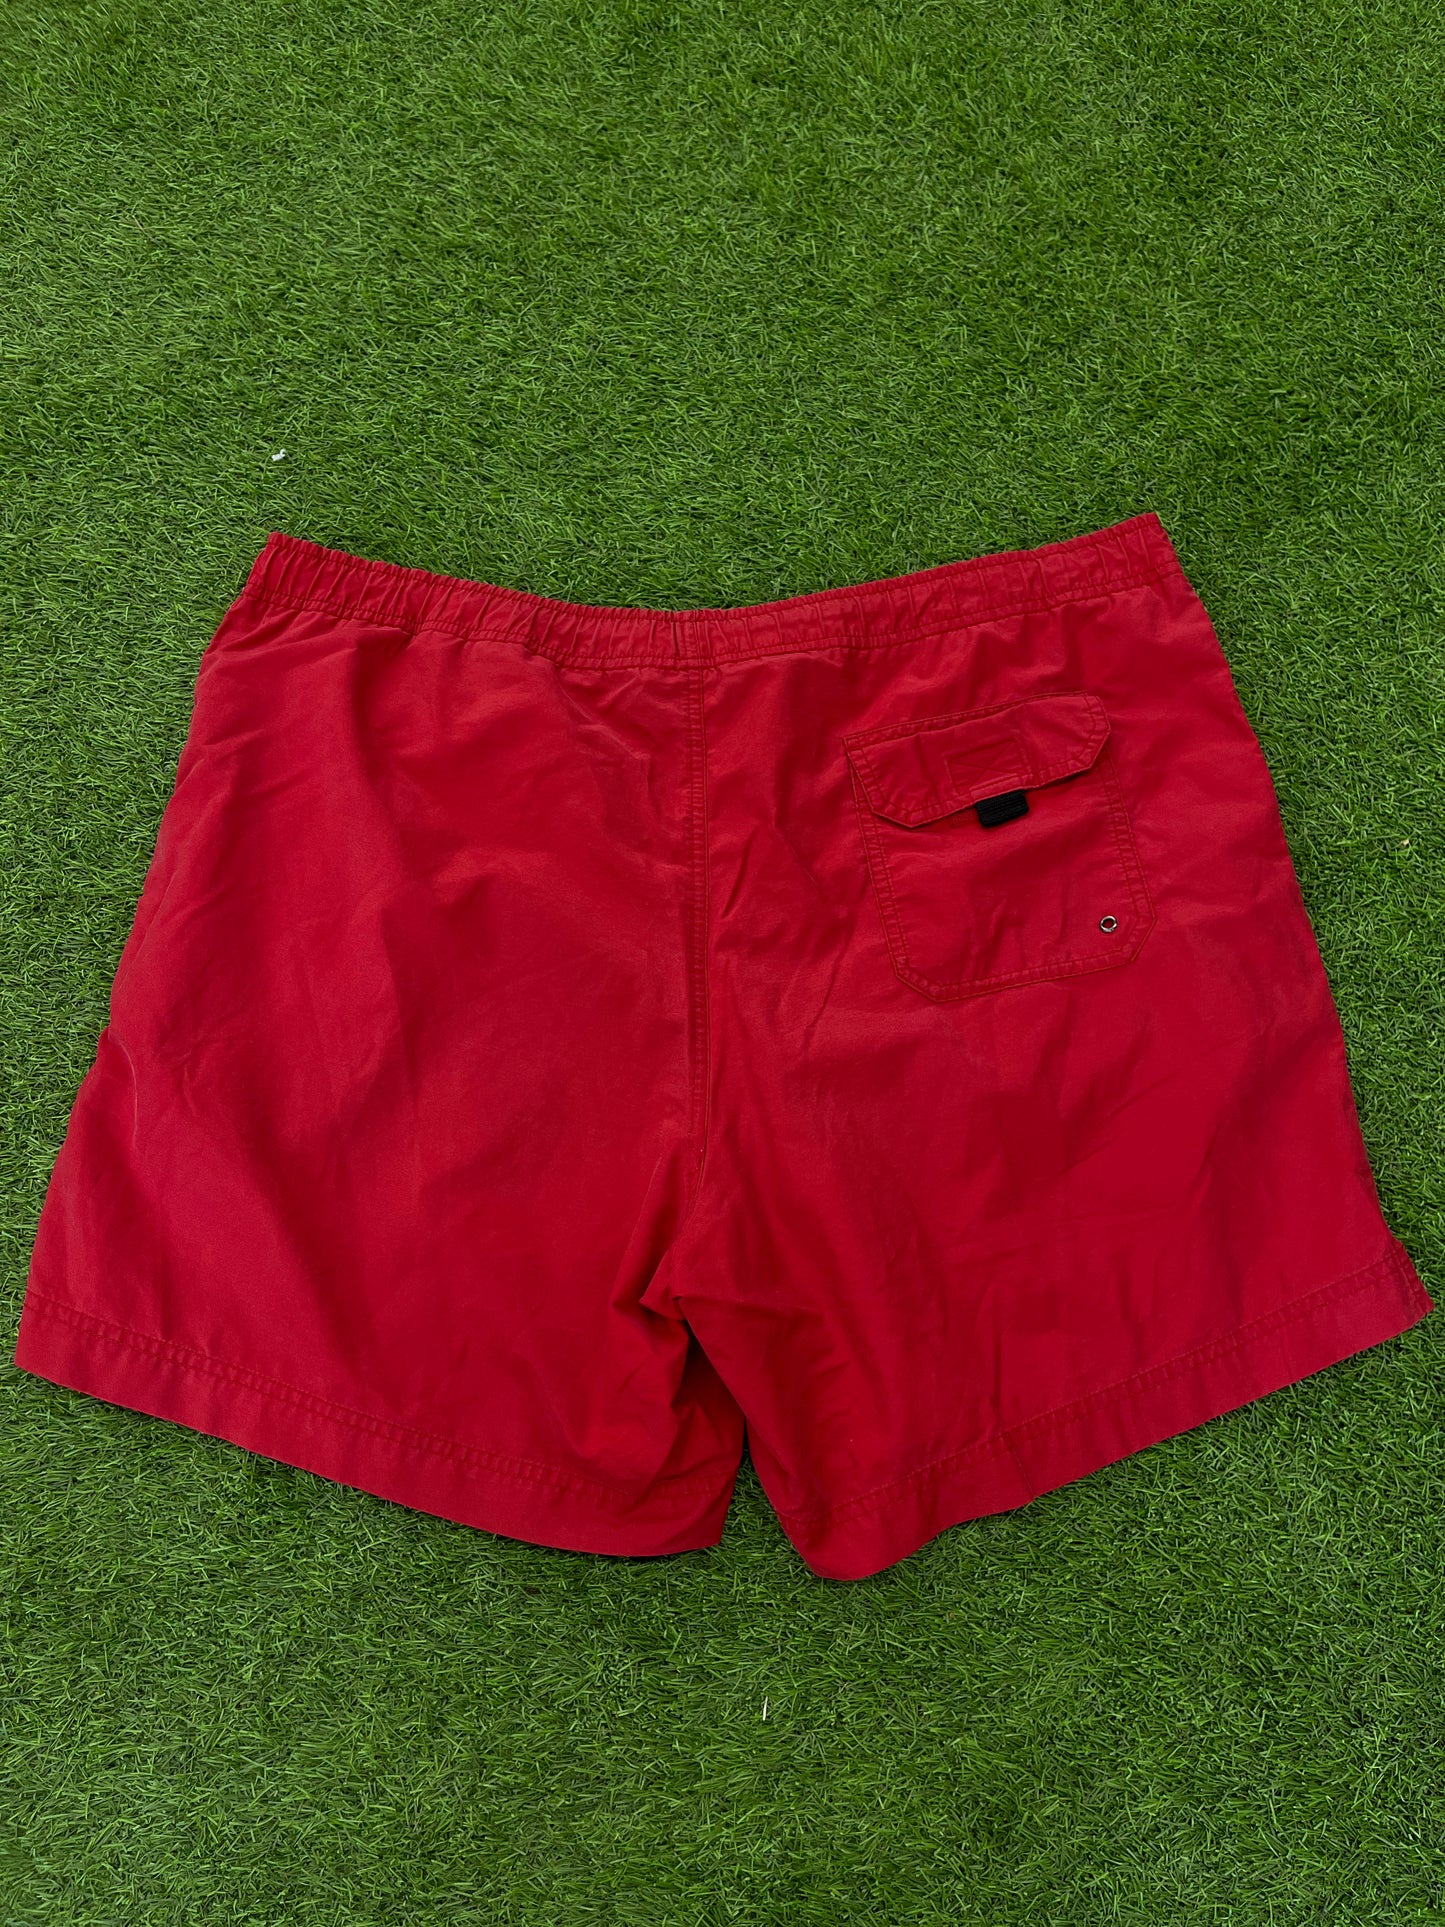 VTG Polo Sport Red Swim Shorts Sz XL